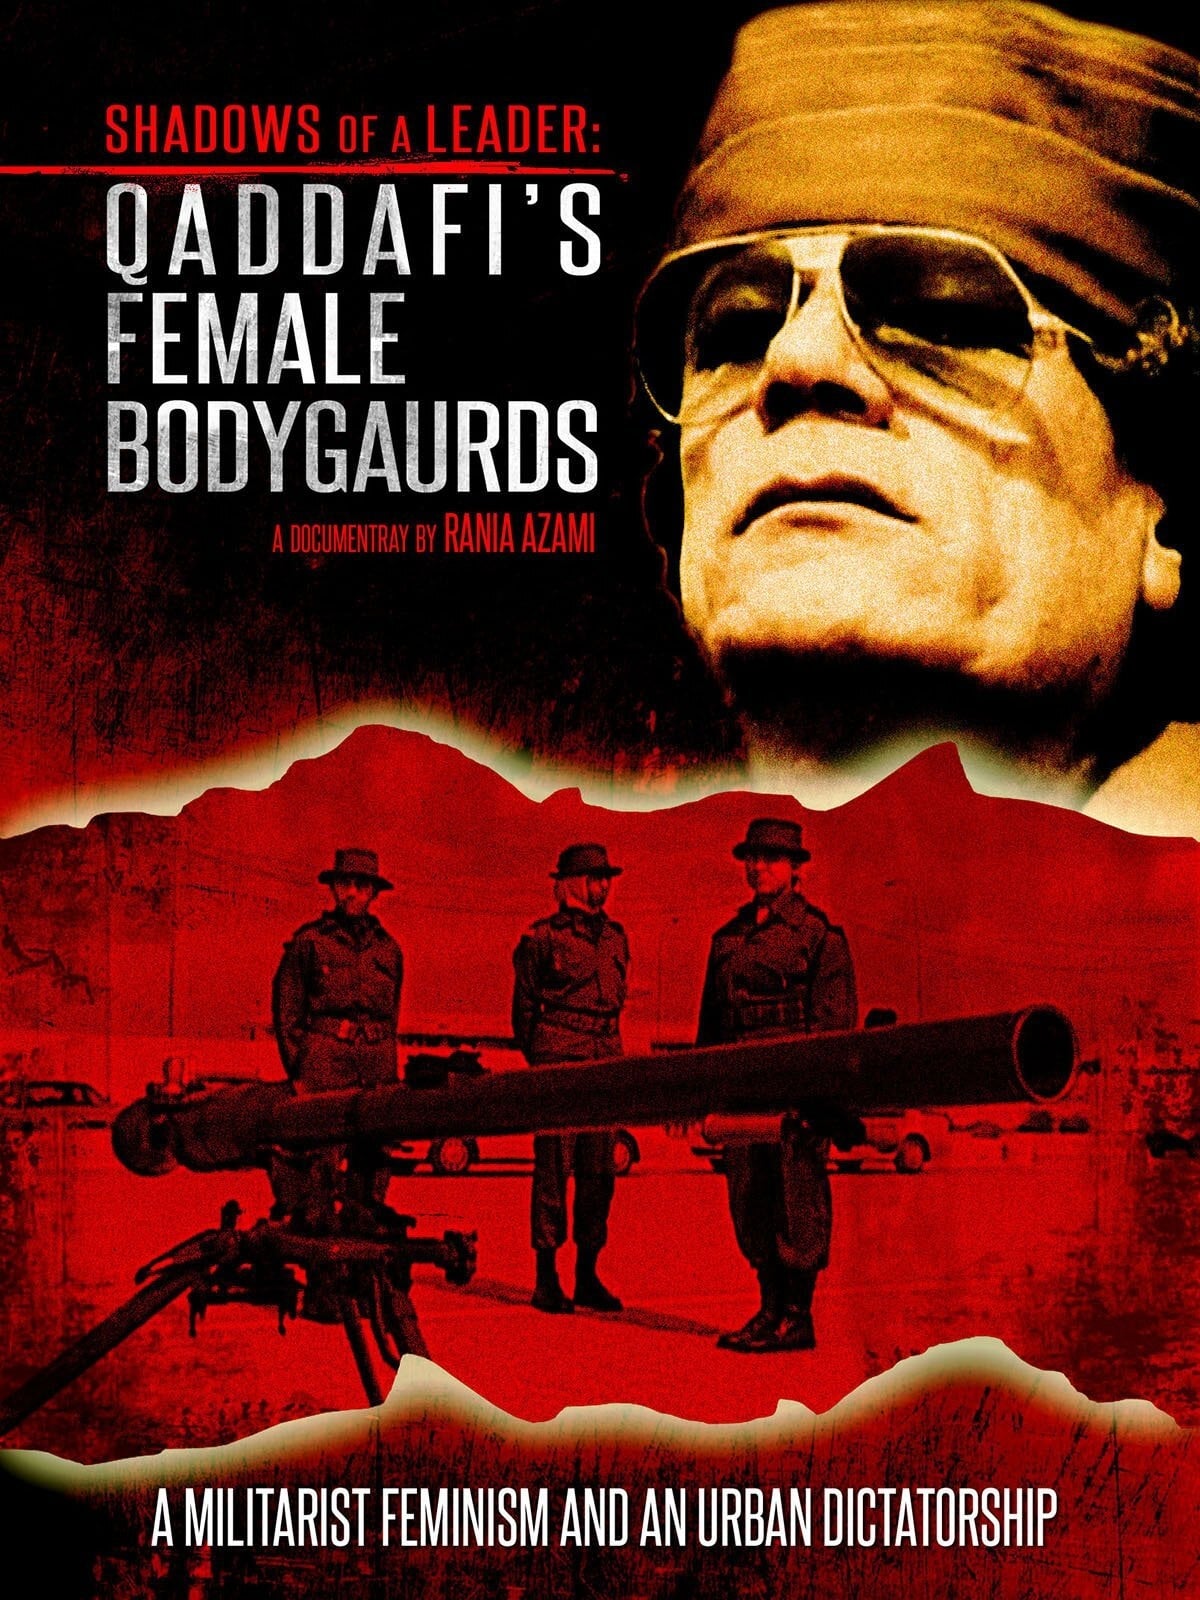 Shadows of a Leader: Qaddafi's Female Bodyguards on FREECABLE TV